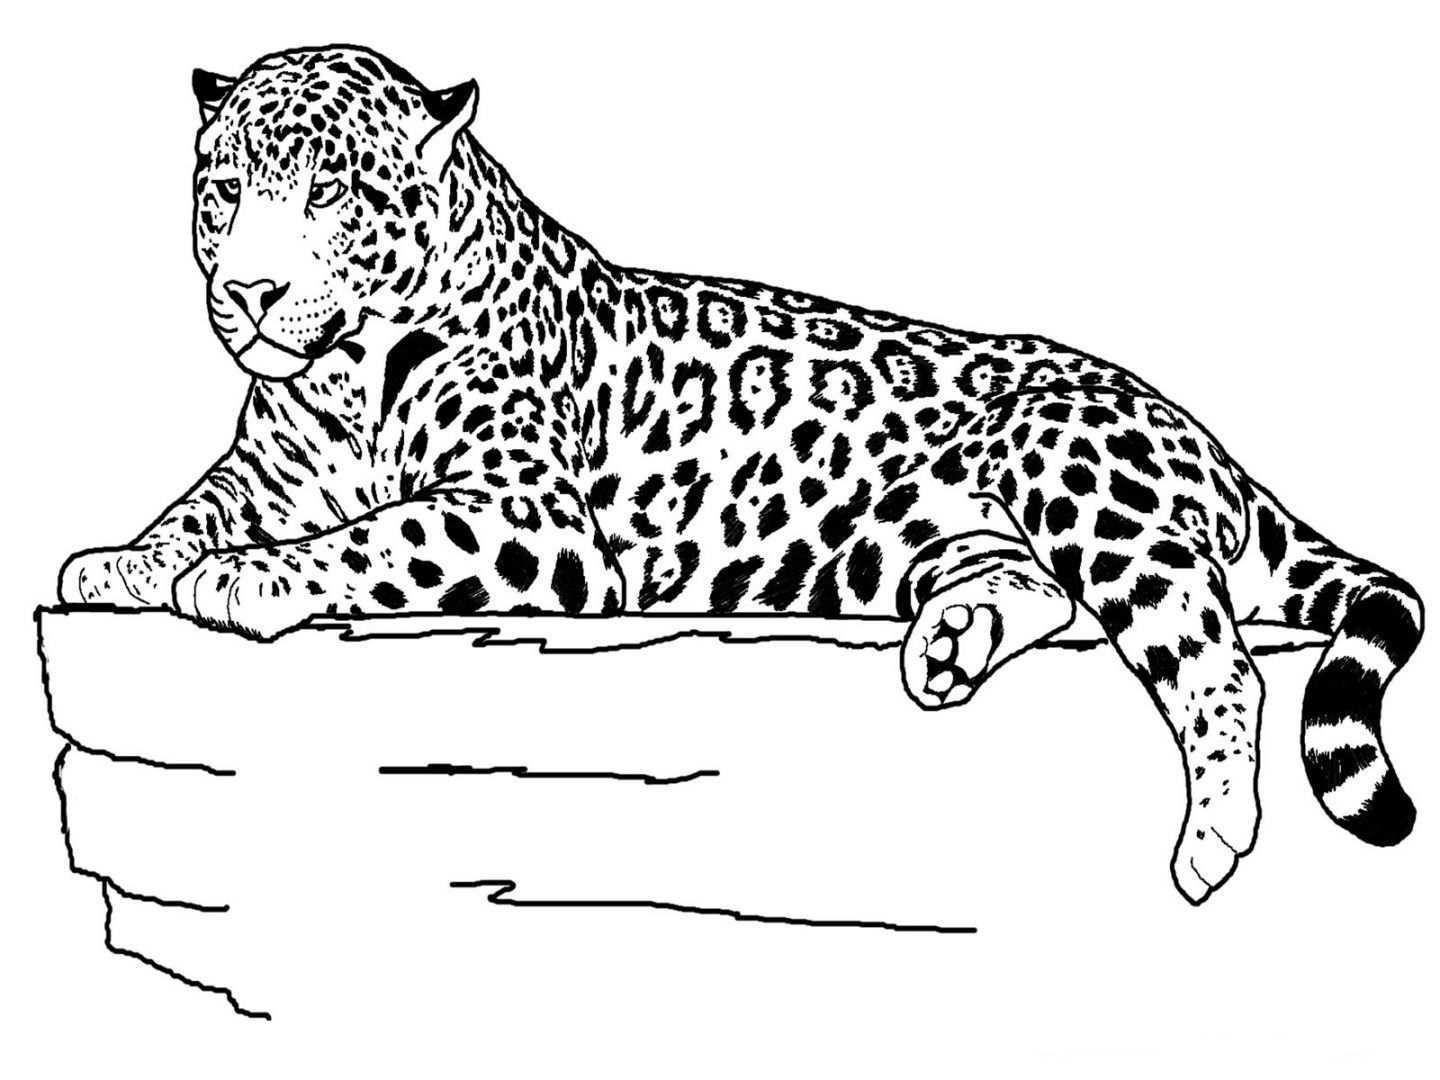 Jaguar Jpg 1440 1080 Farm Animal Coloring Pages Zoo Animal Coloring Pages Animal Coloring Pages